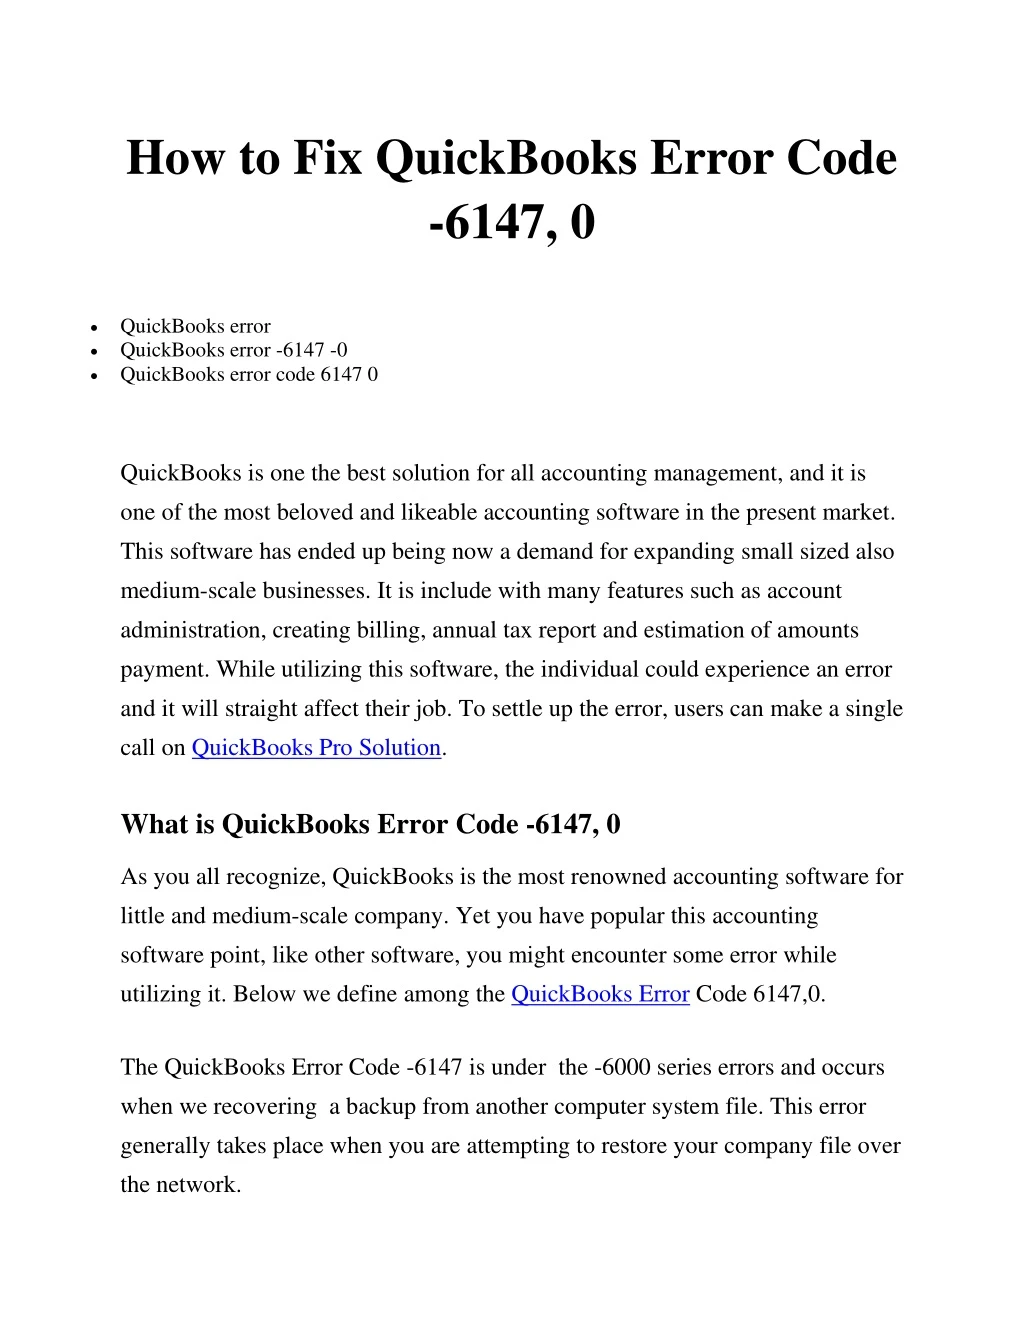 how to fix quickbooks error code 6147